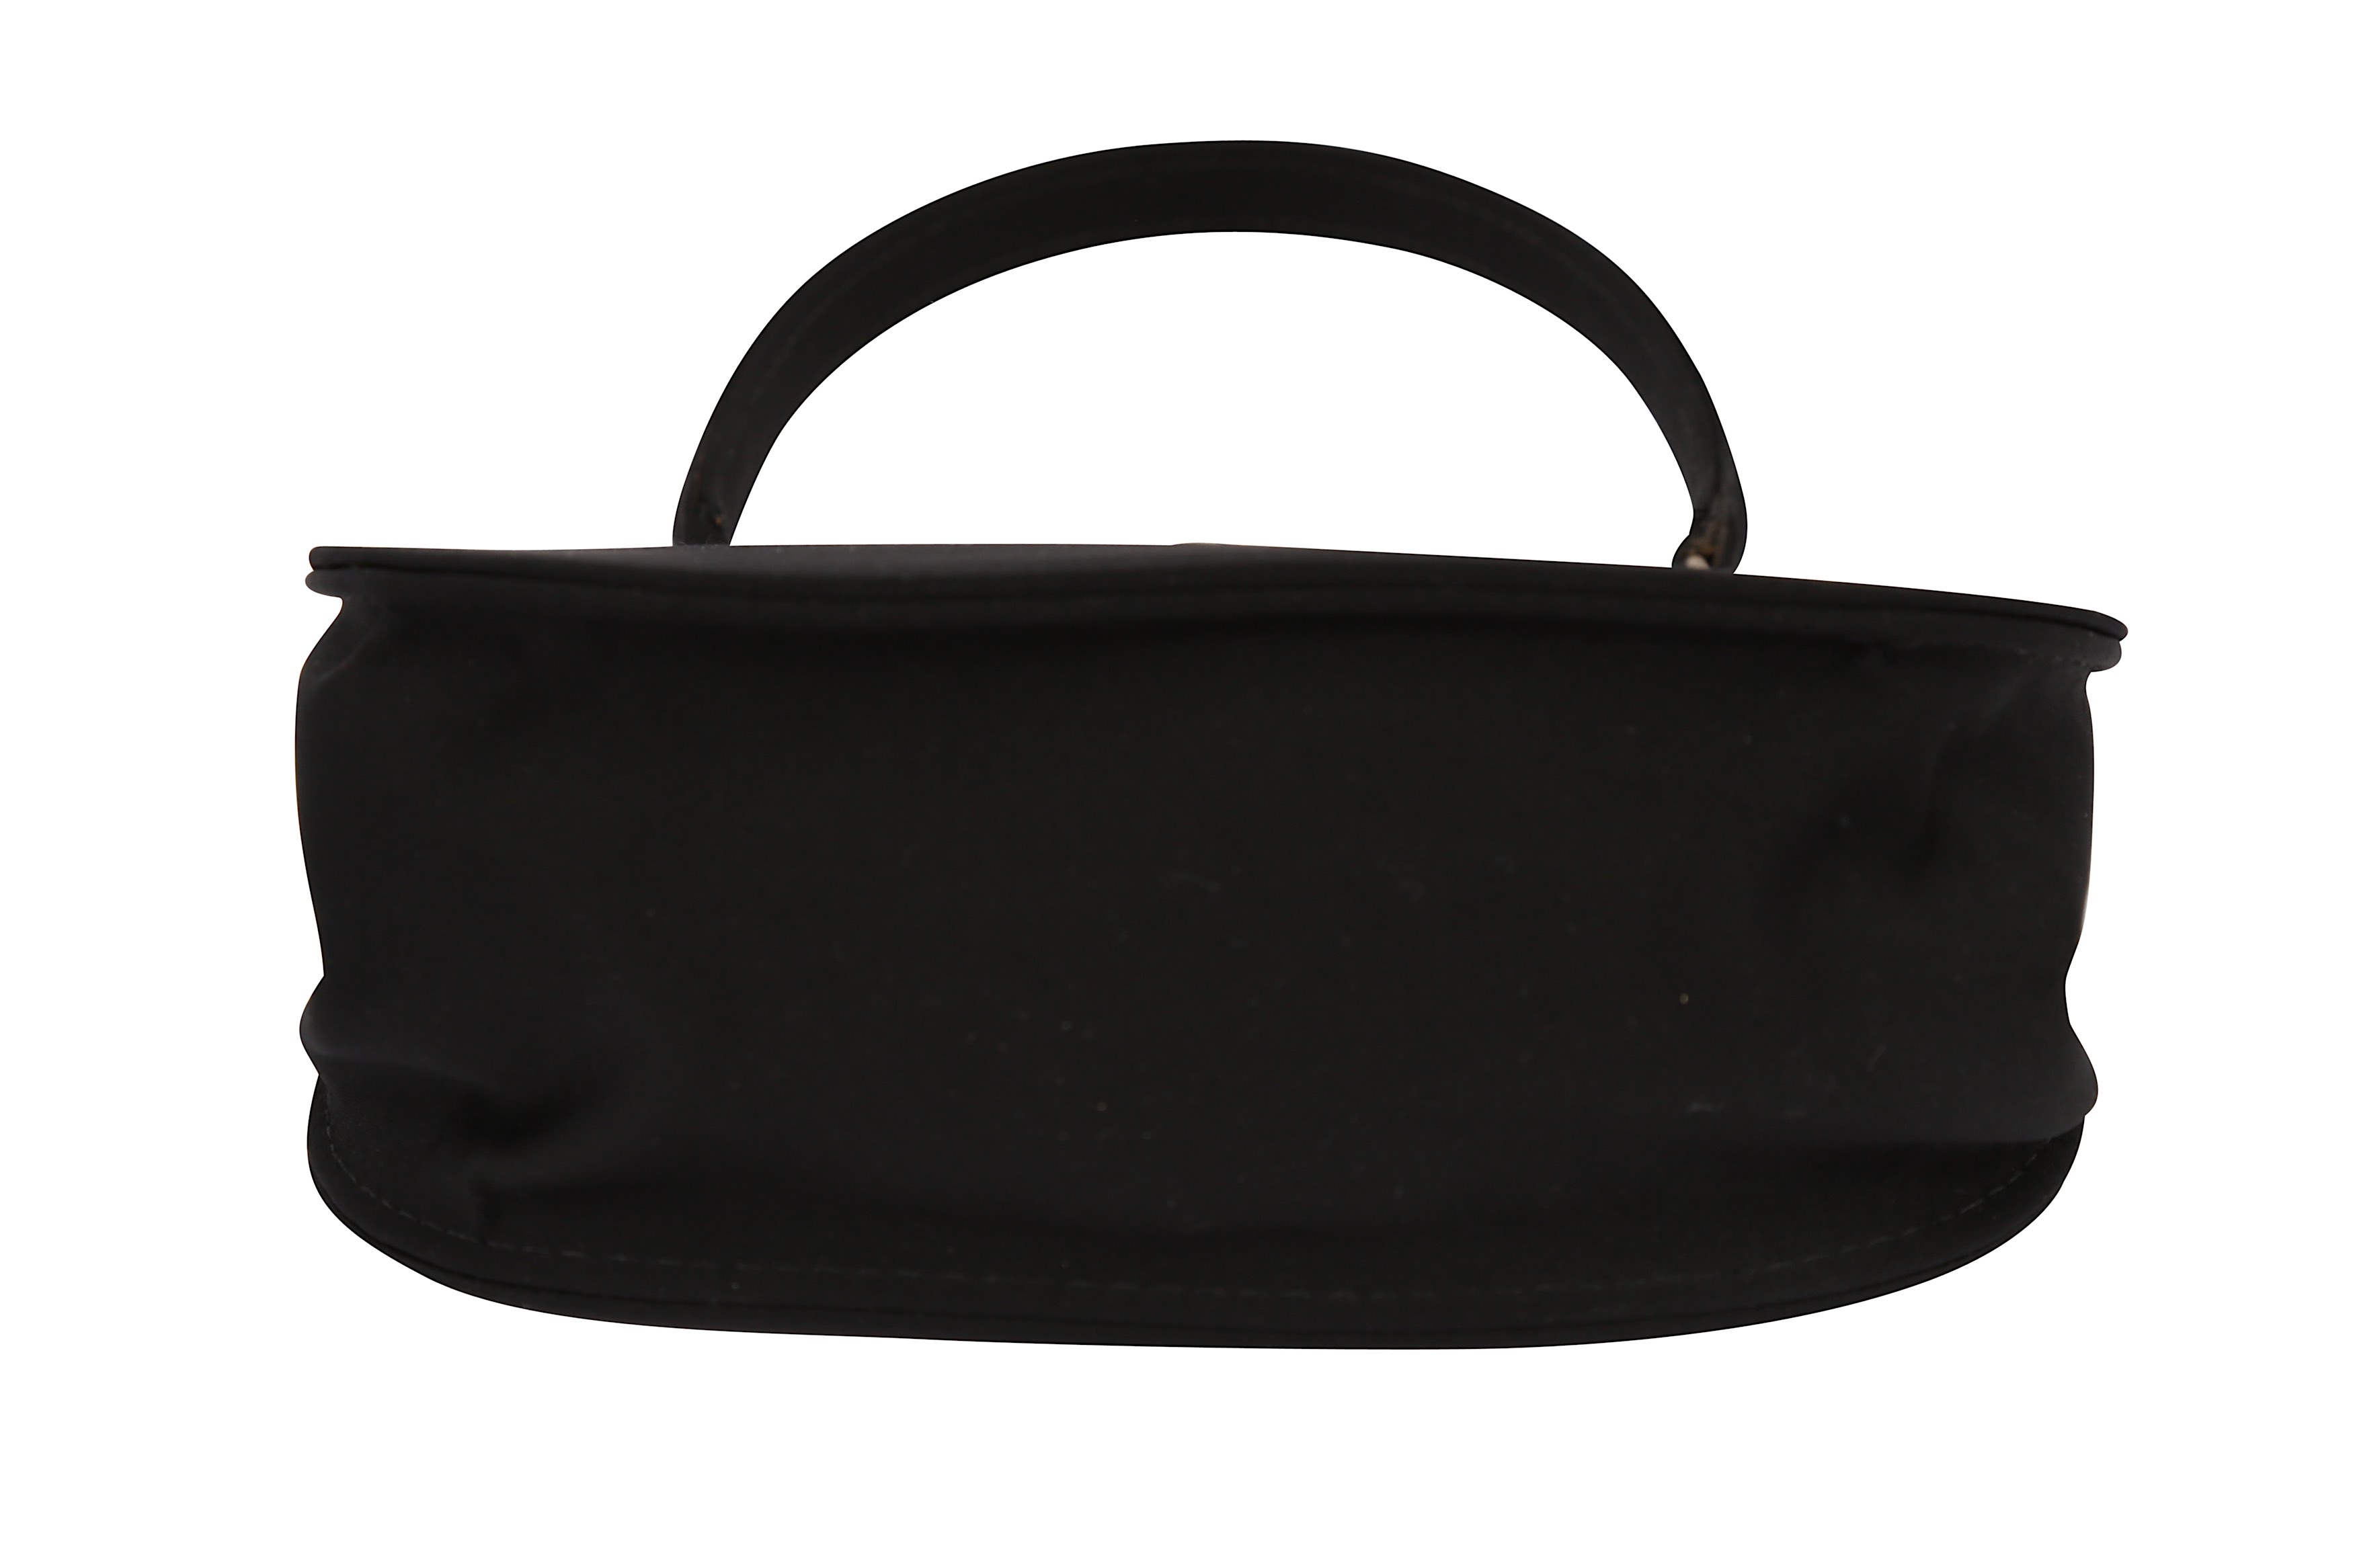 Gianni Versace Black Top Handle Mini Bag - Image 5 of 8